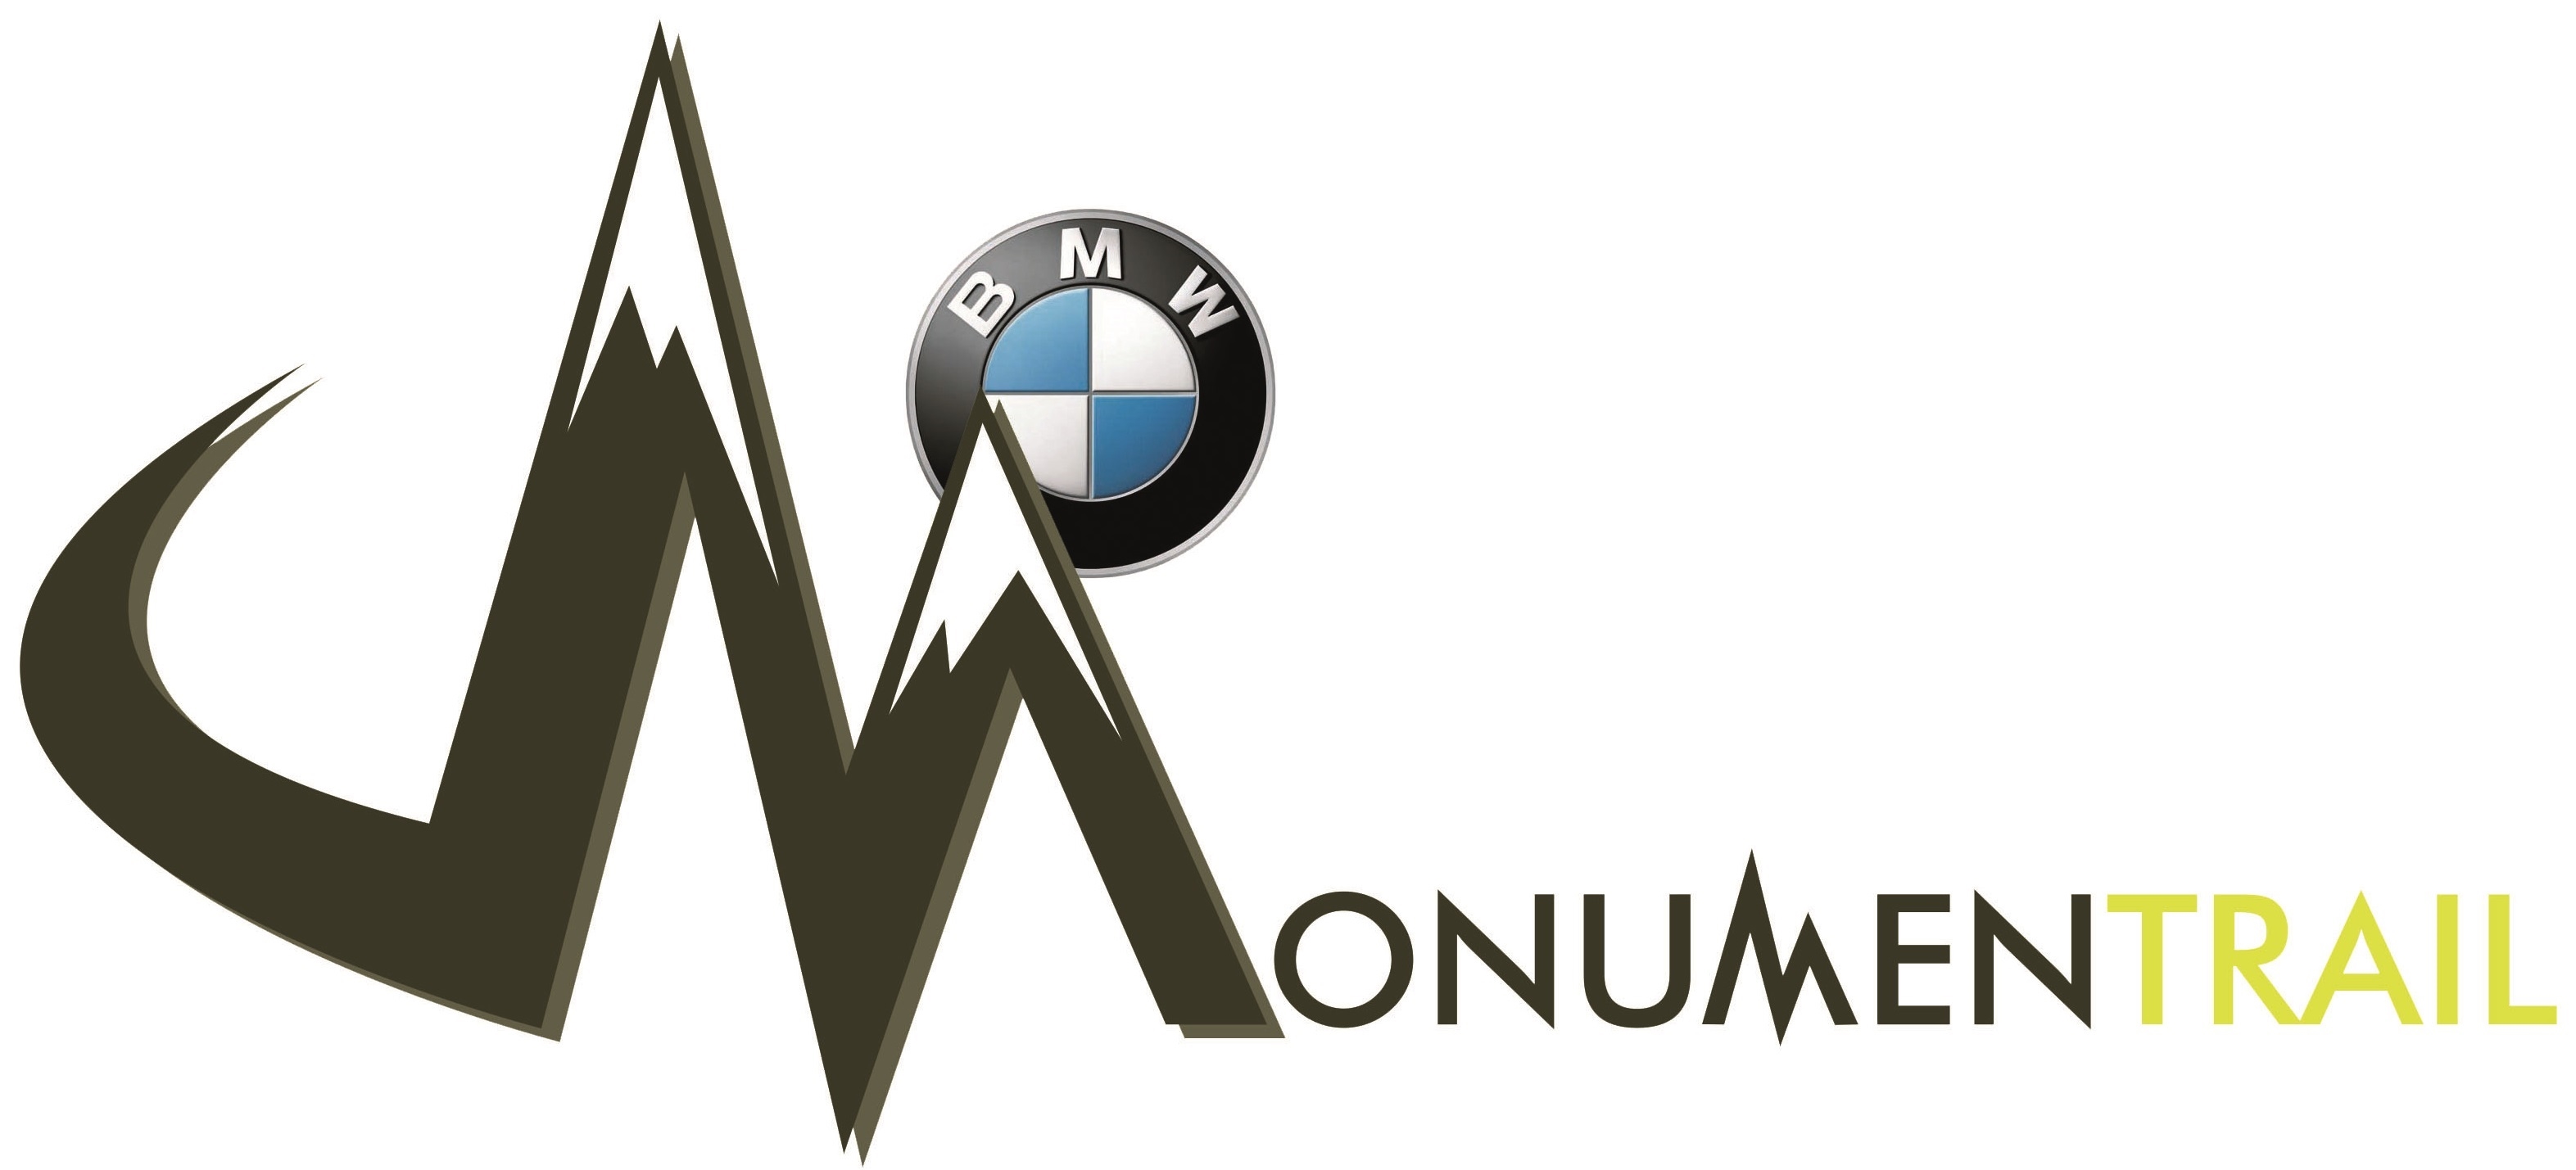 III Monumentrail BMW Mini Eresma Motor